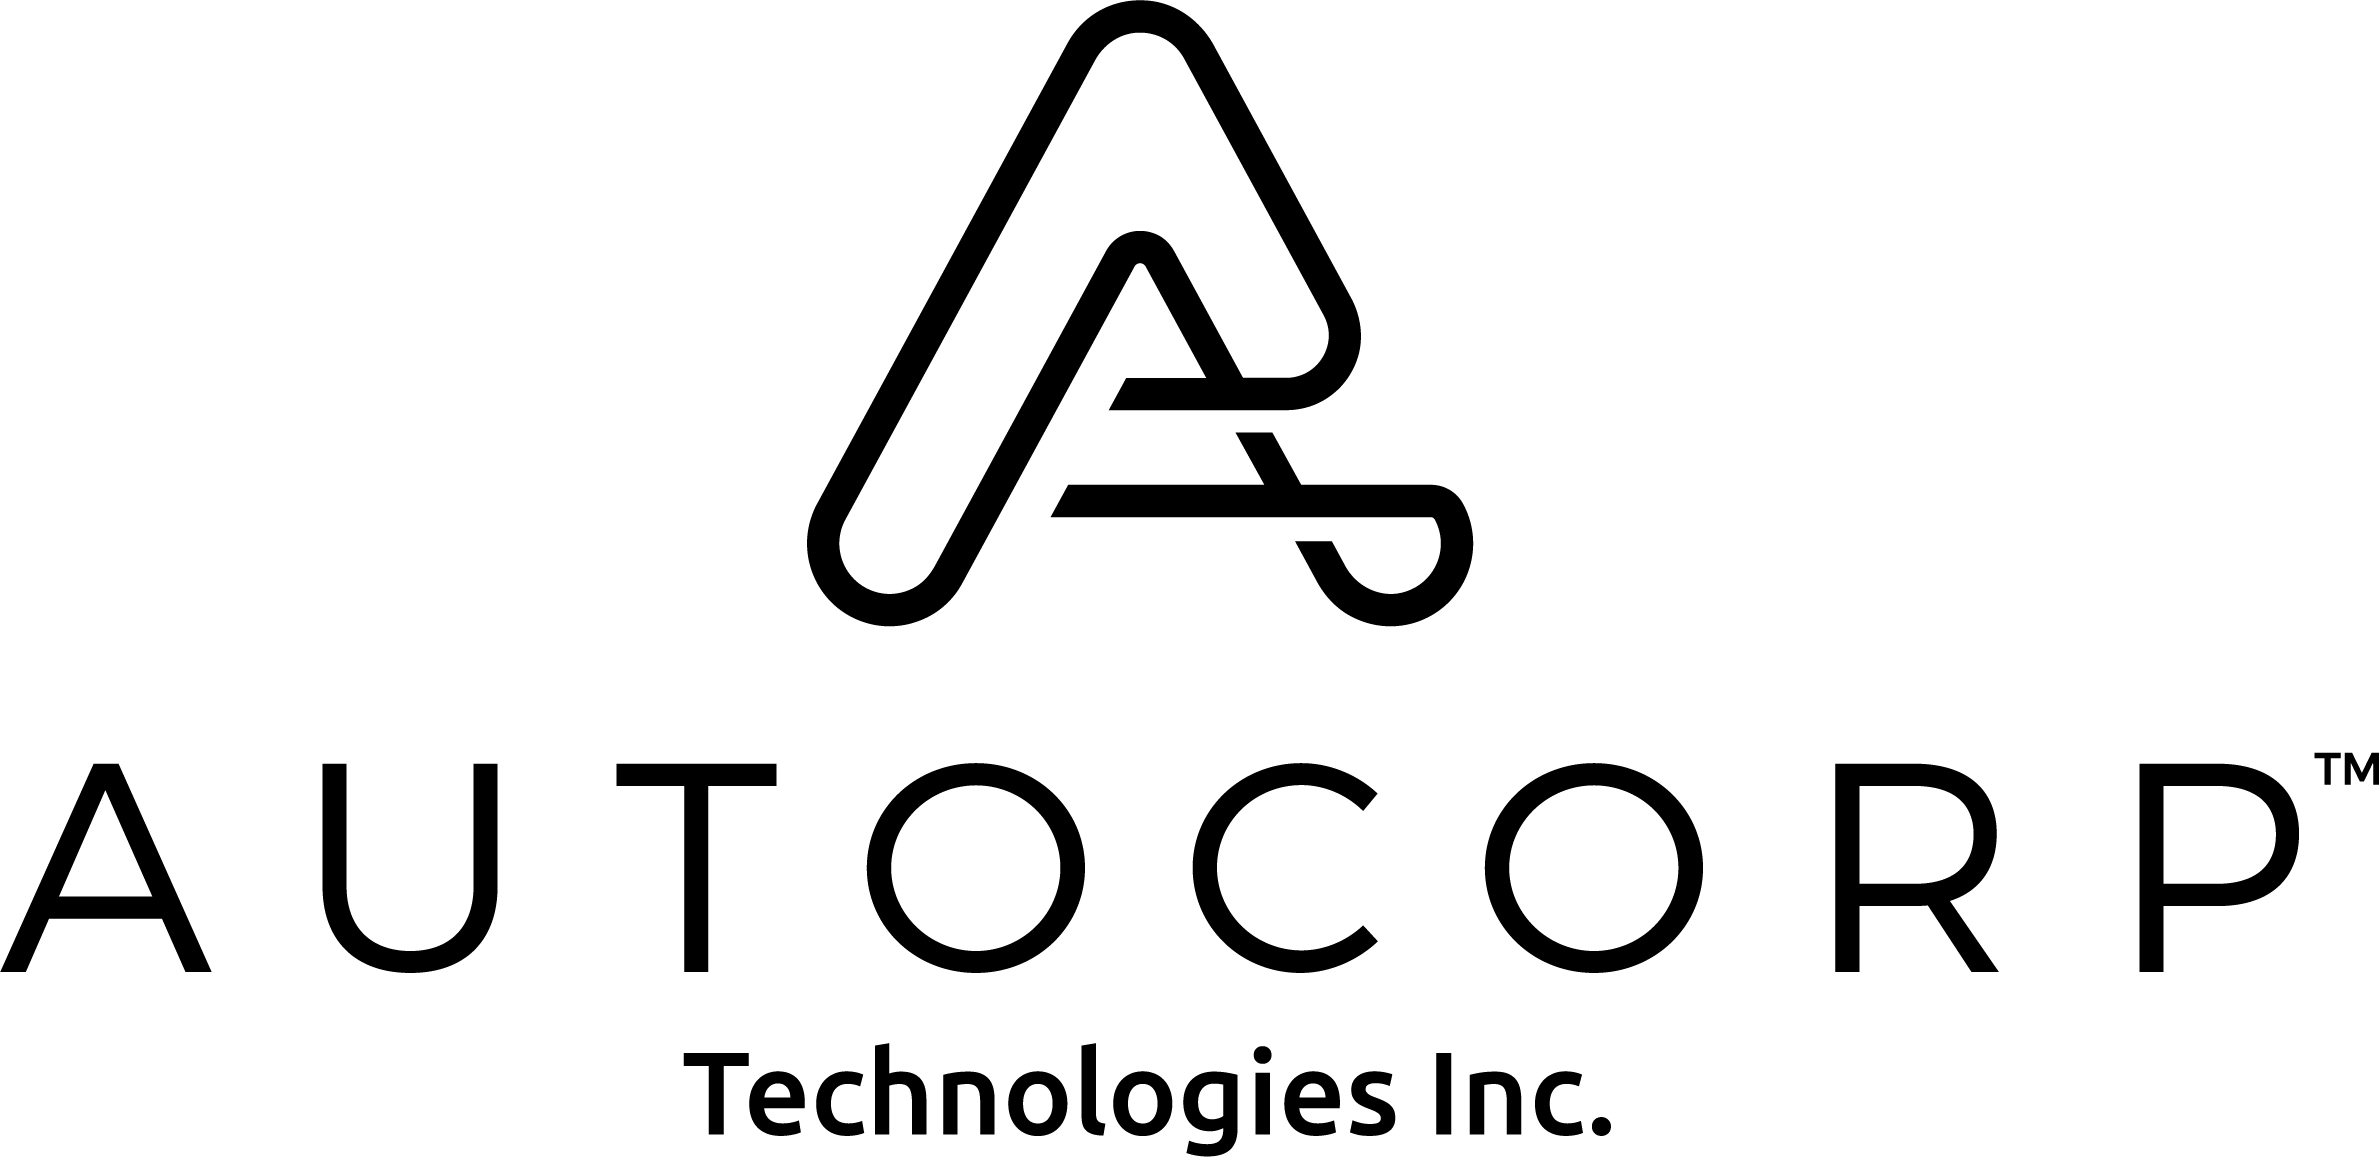 Autocorp-Technologies-TM-Black_1@4x